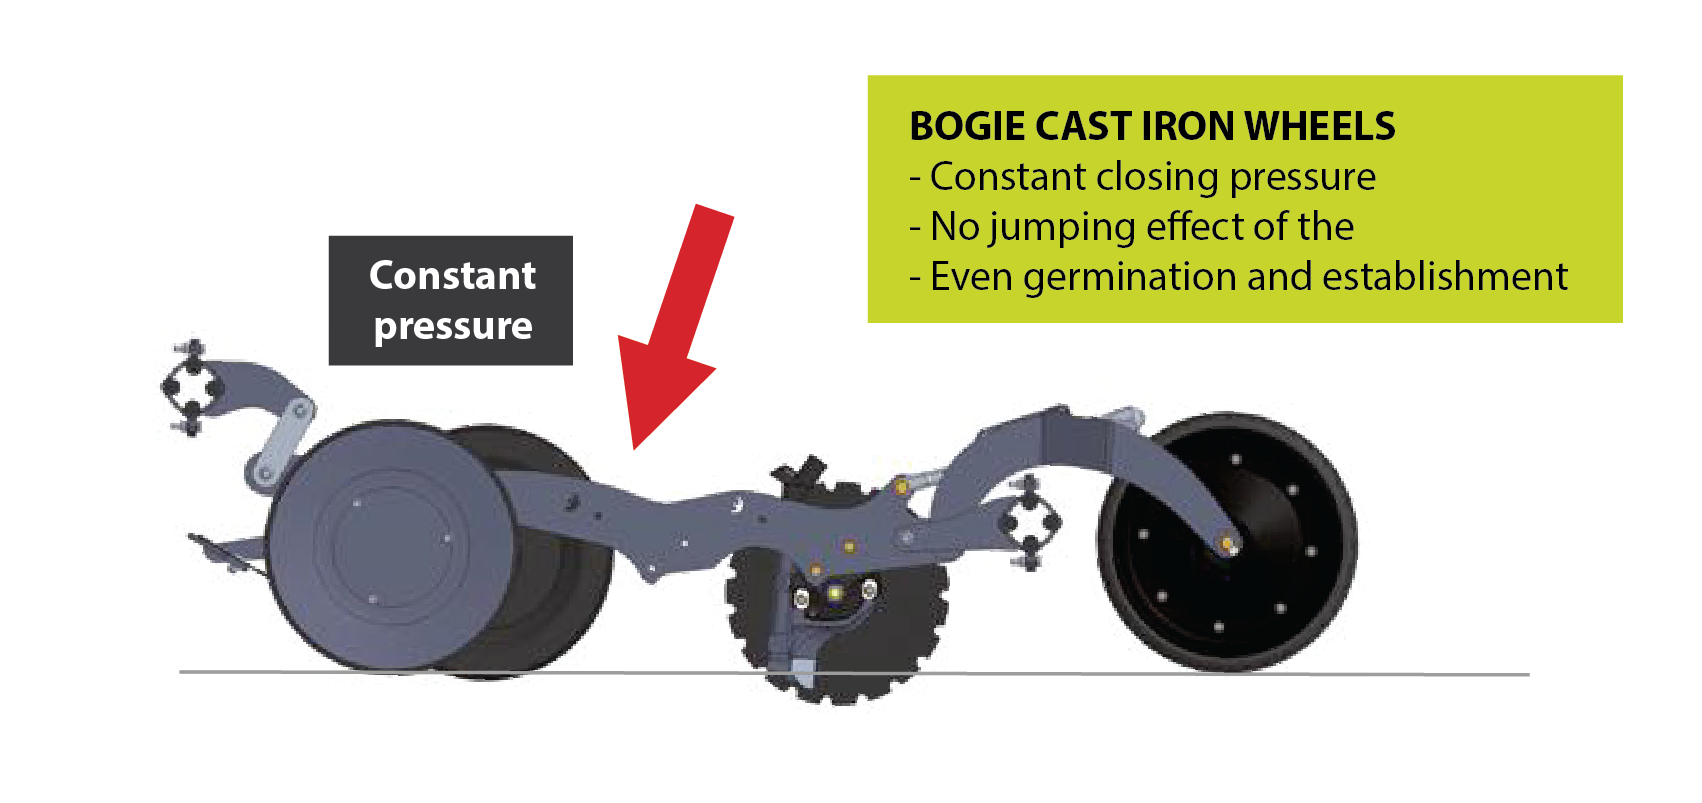 Bogie Cast Iron Wheels